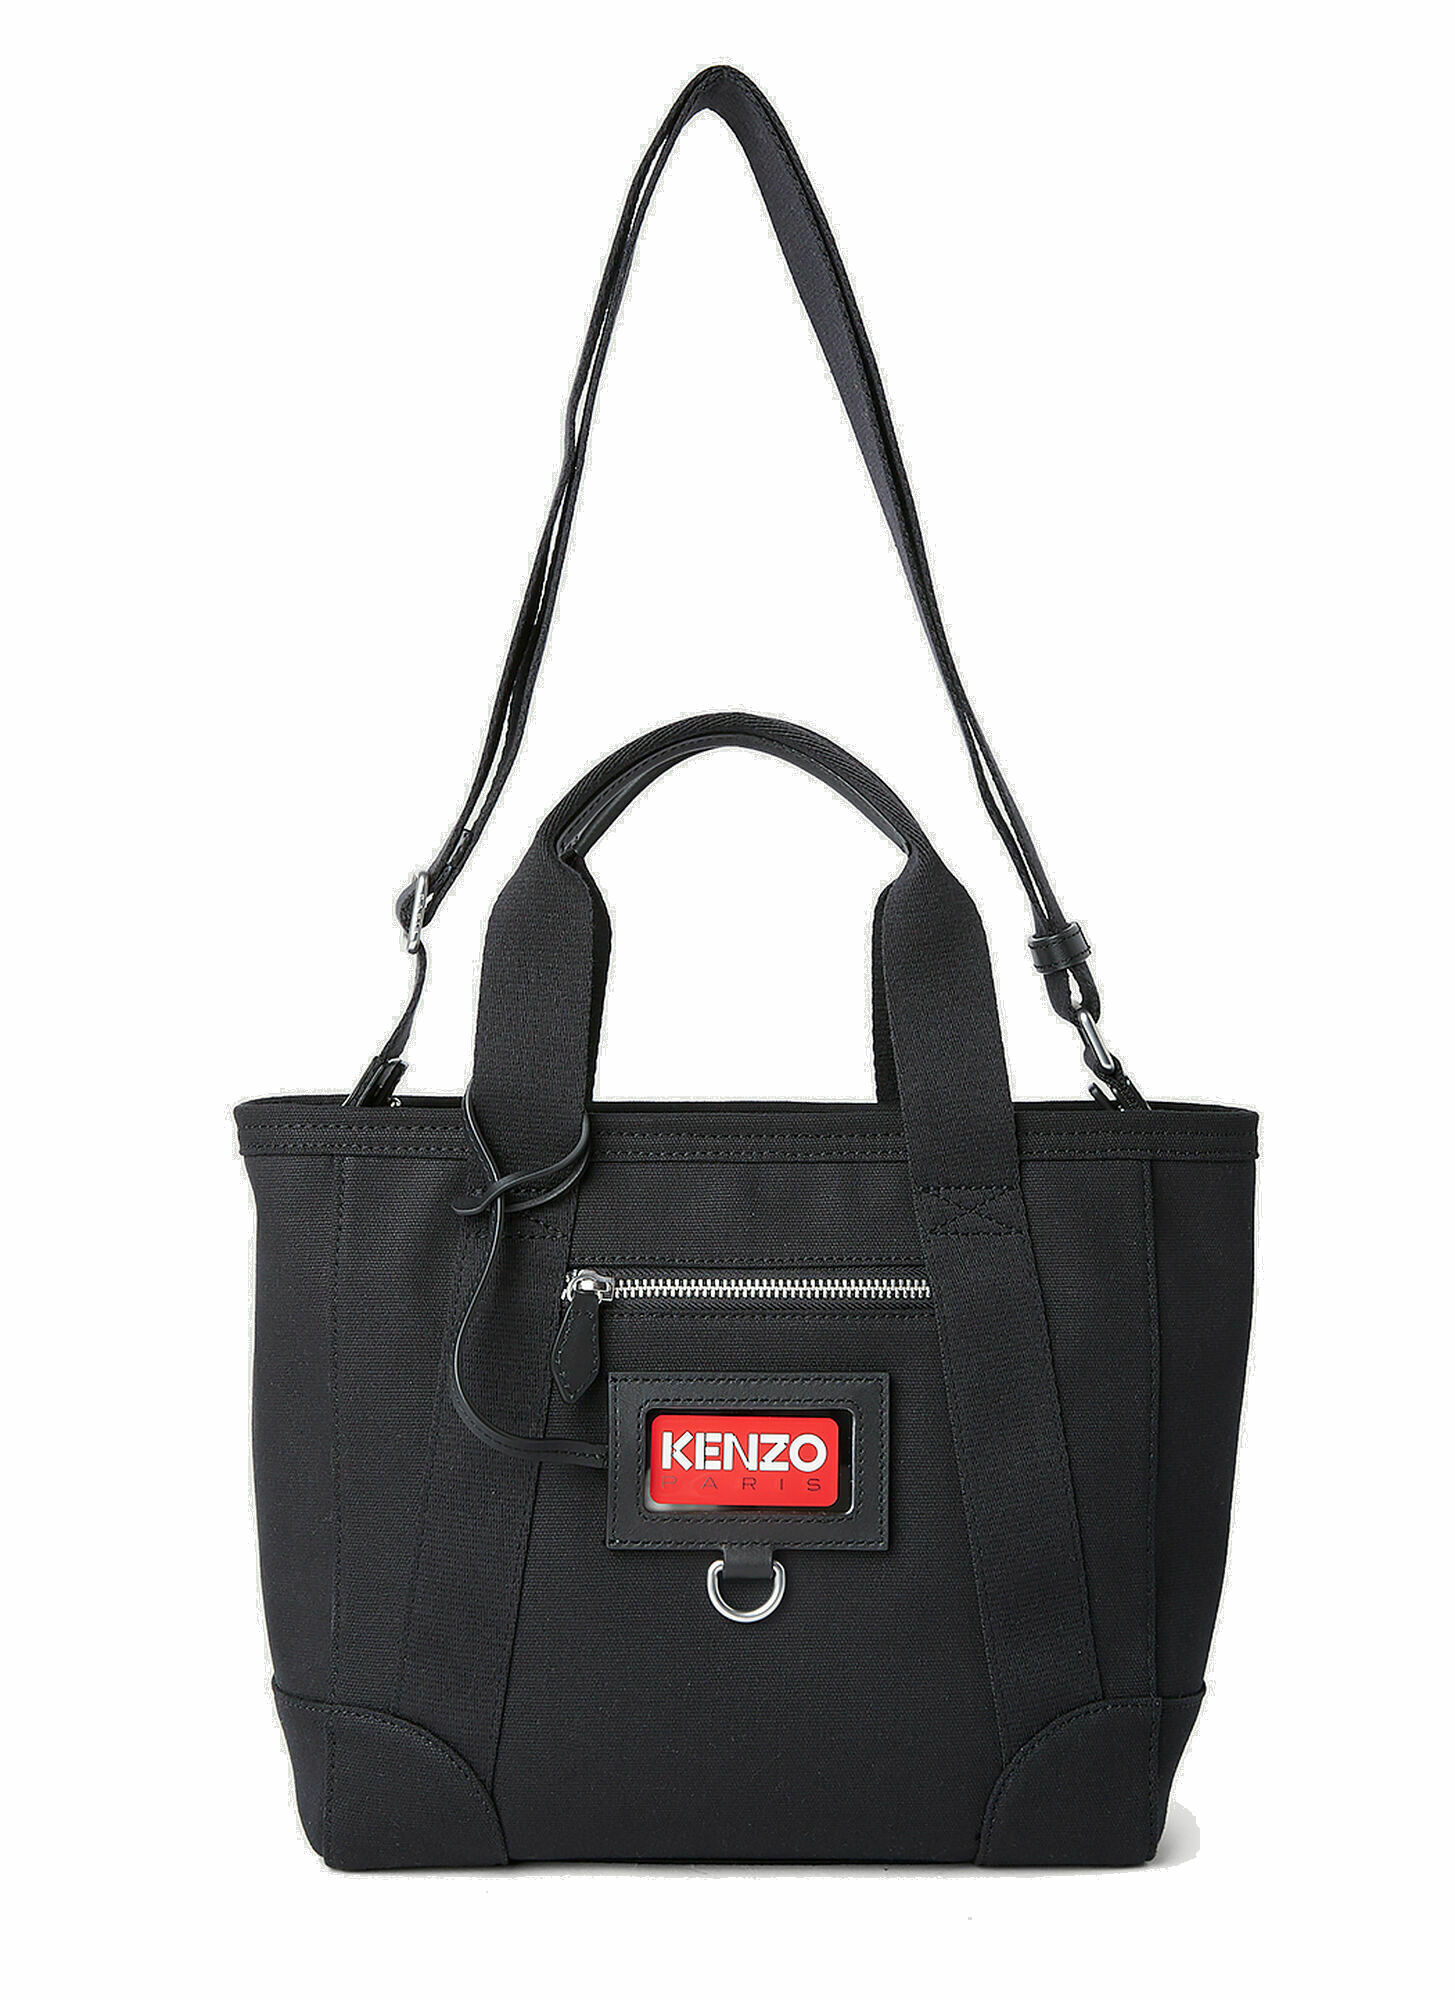 Kenzo - Small Tote Bag in Black Kenzo